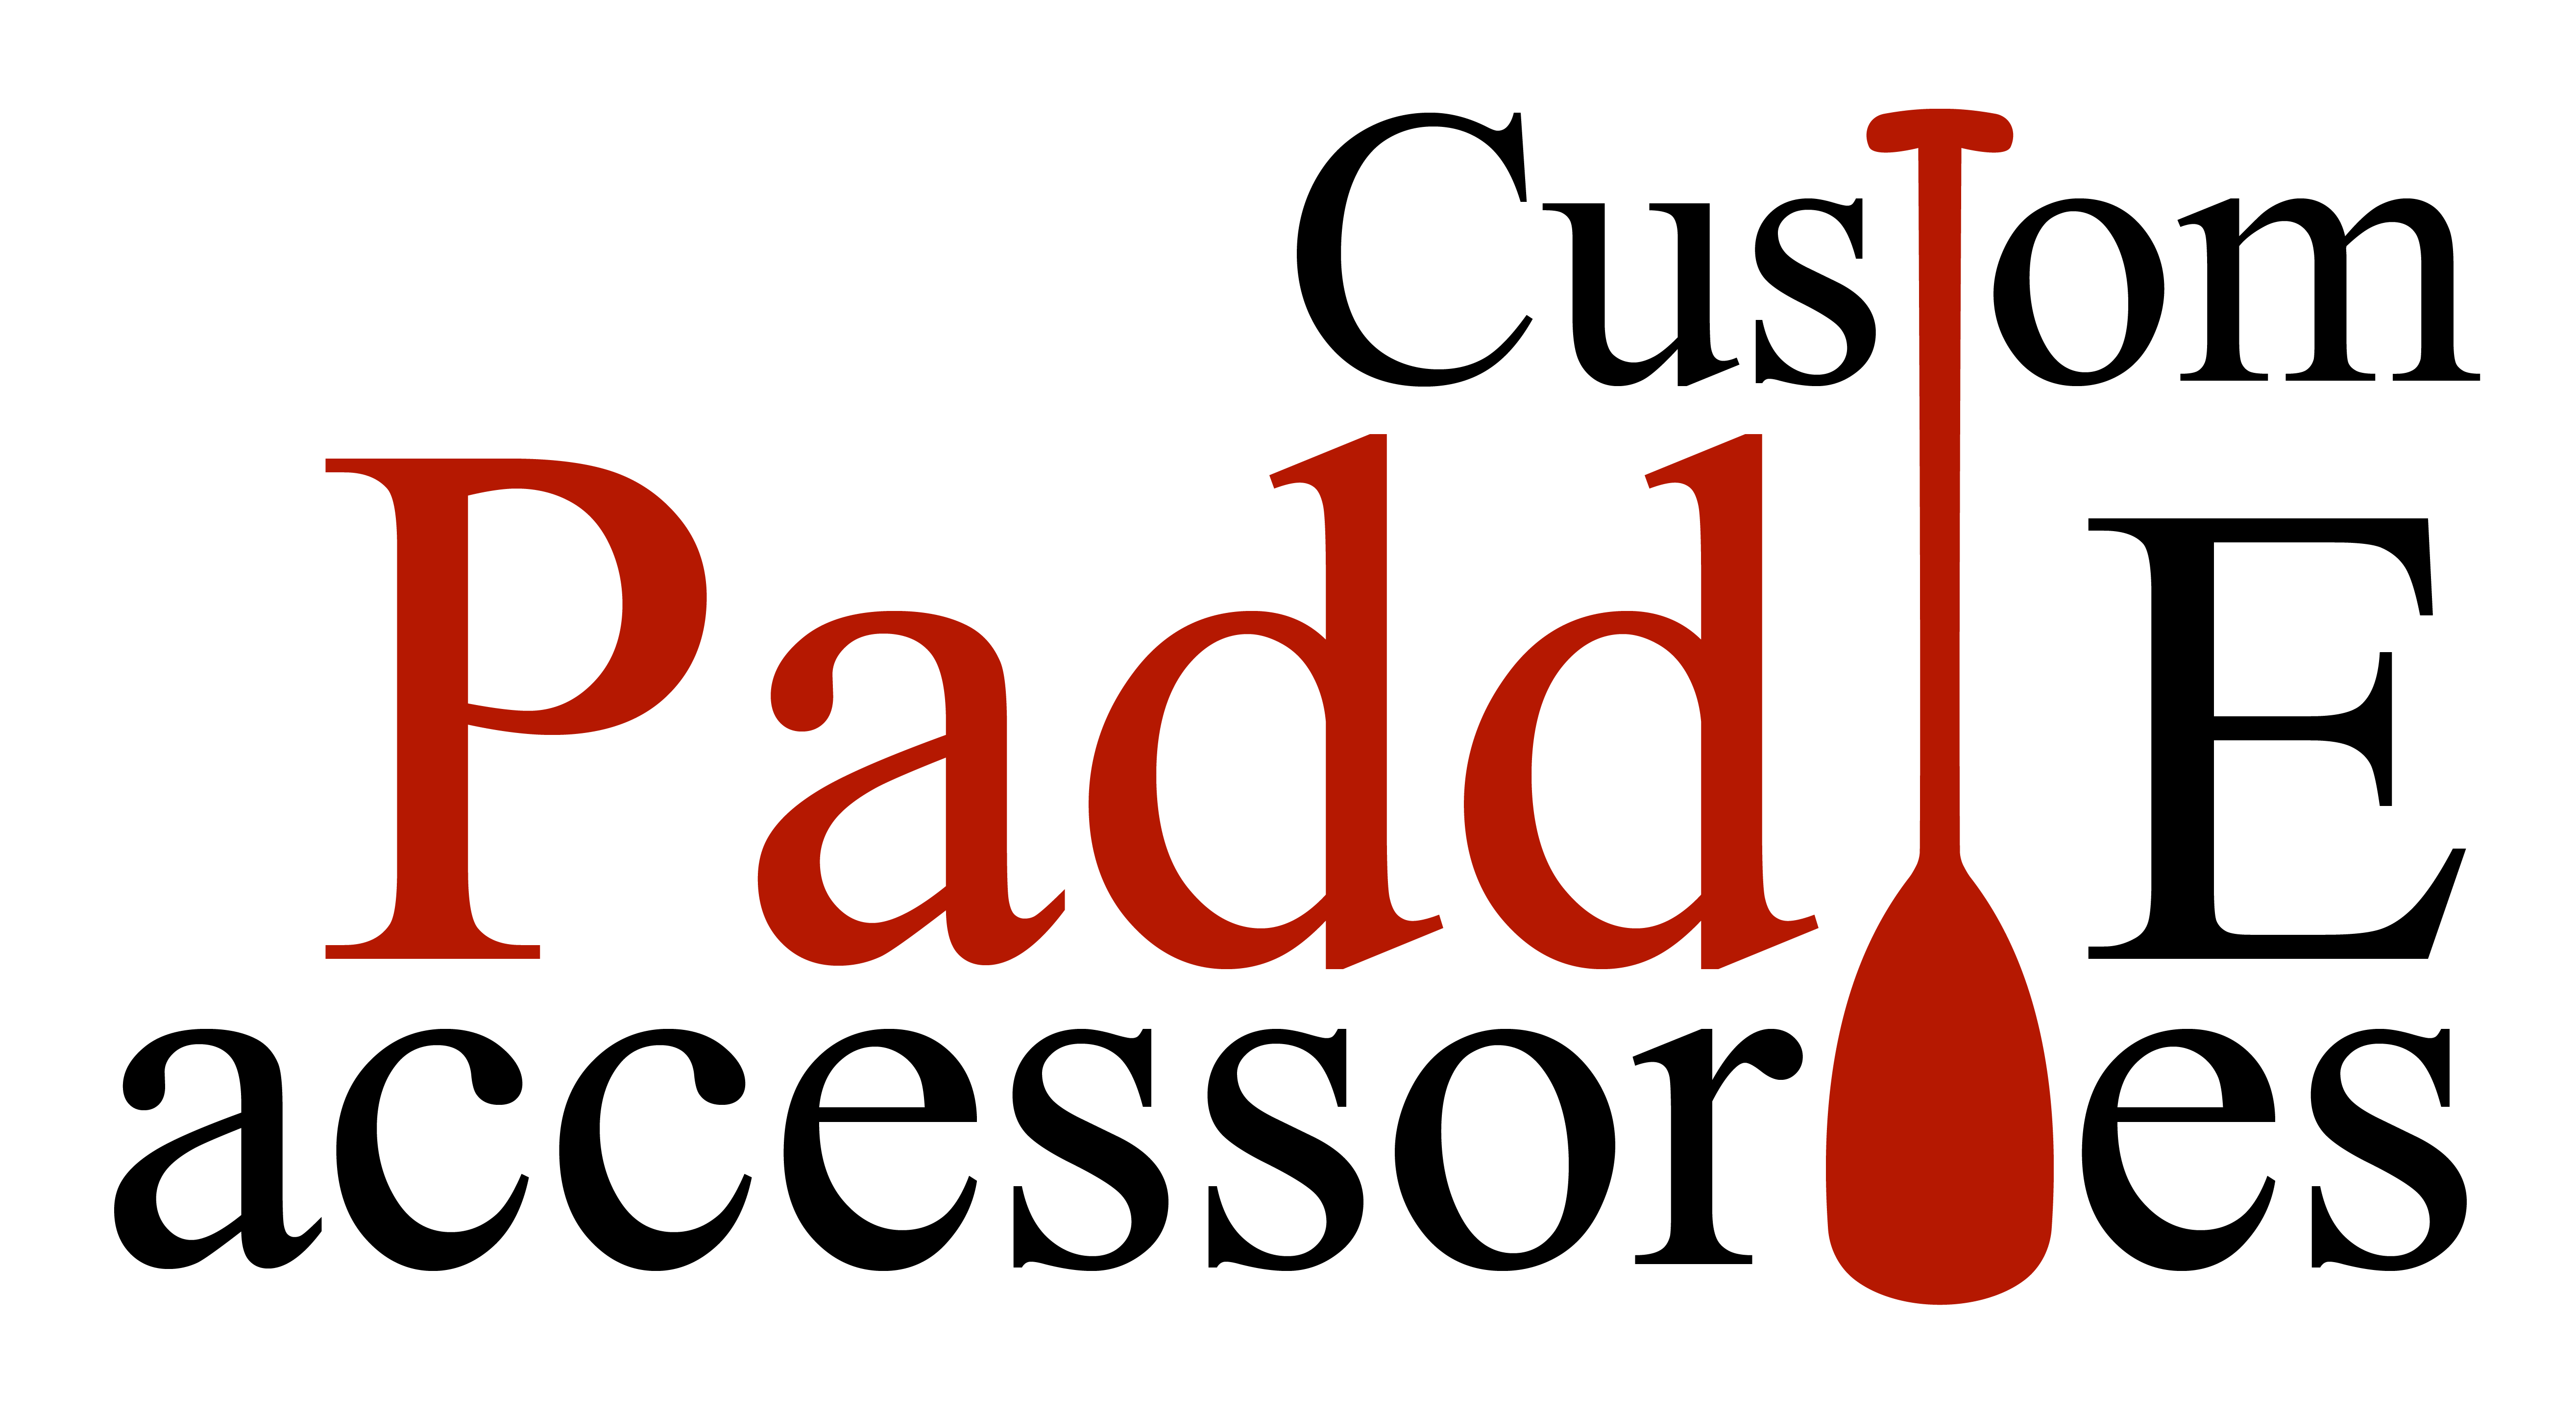 Custom Paddle Accessories